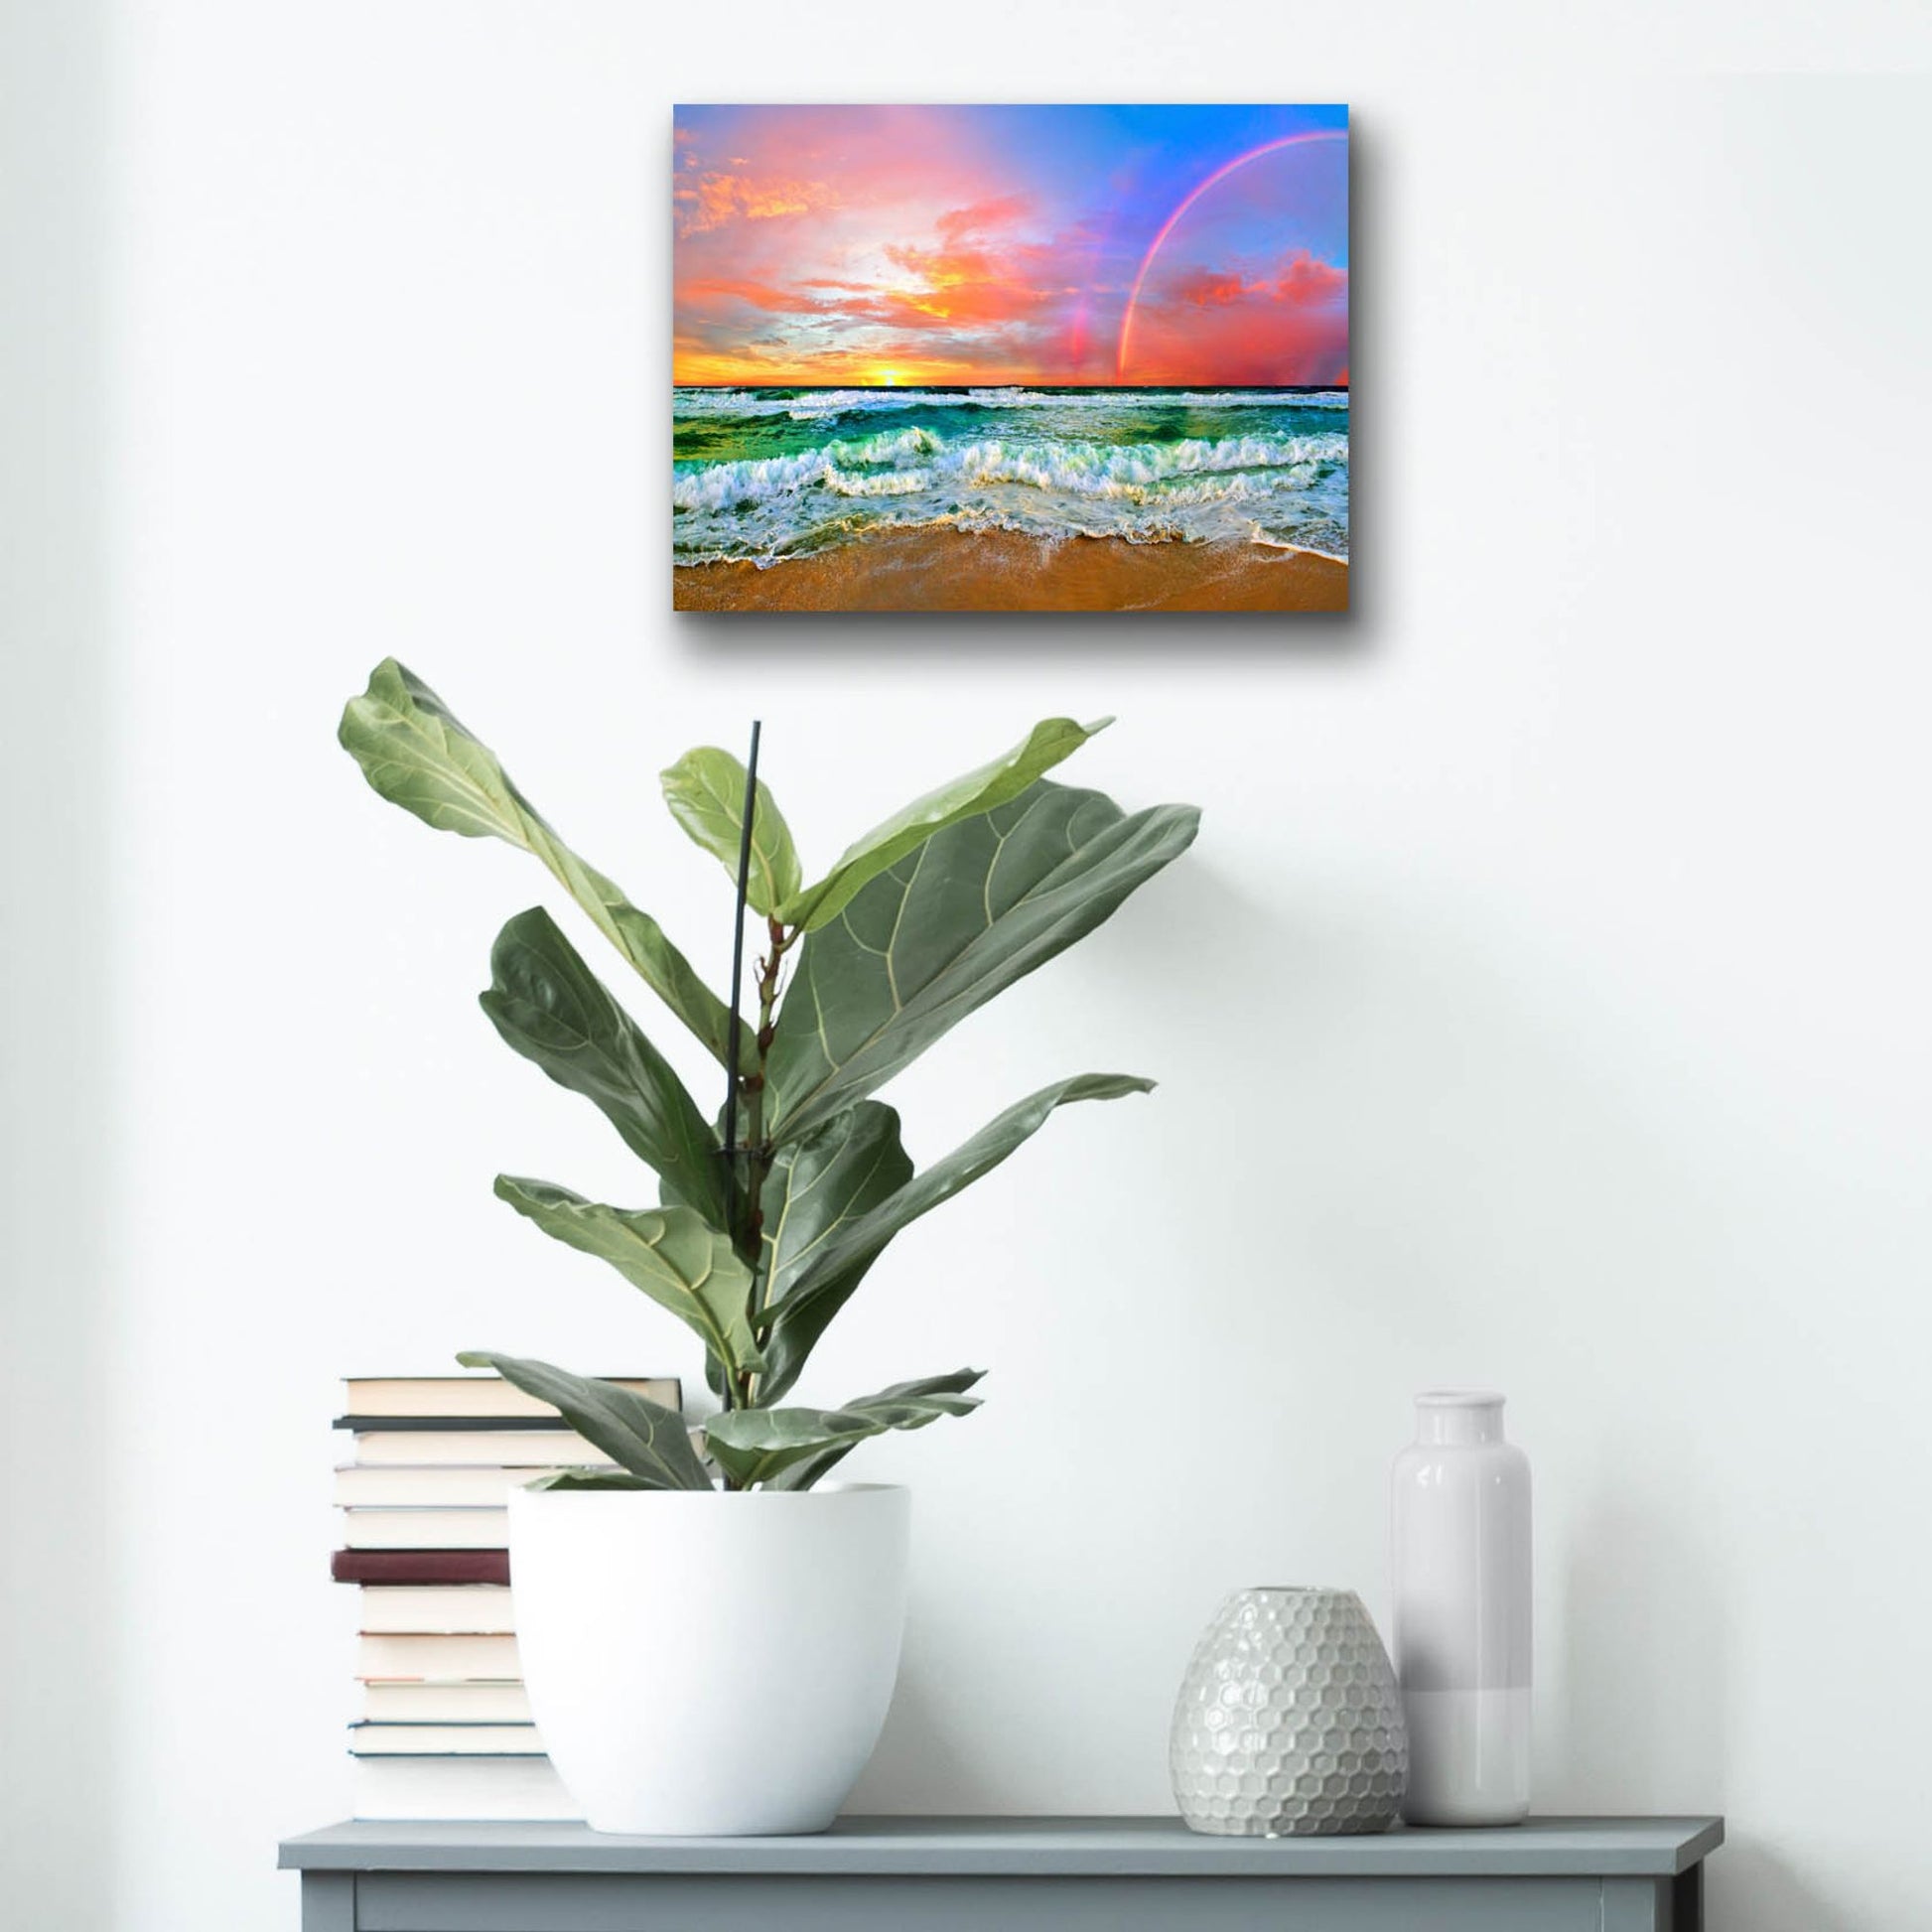 Epic Art 'Beach Rainbow Colorful Ocean Wave Sunset' by Ezra Tanner, Acrylic Glass Wall Art,16x12